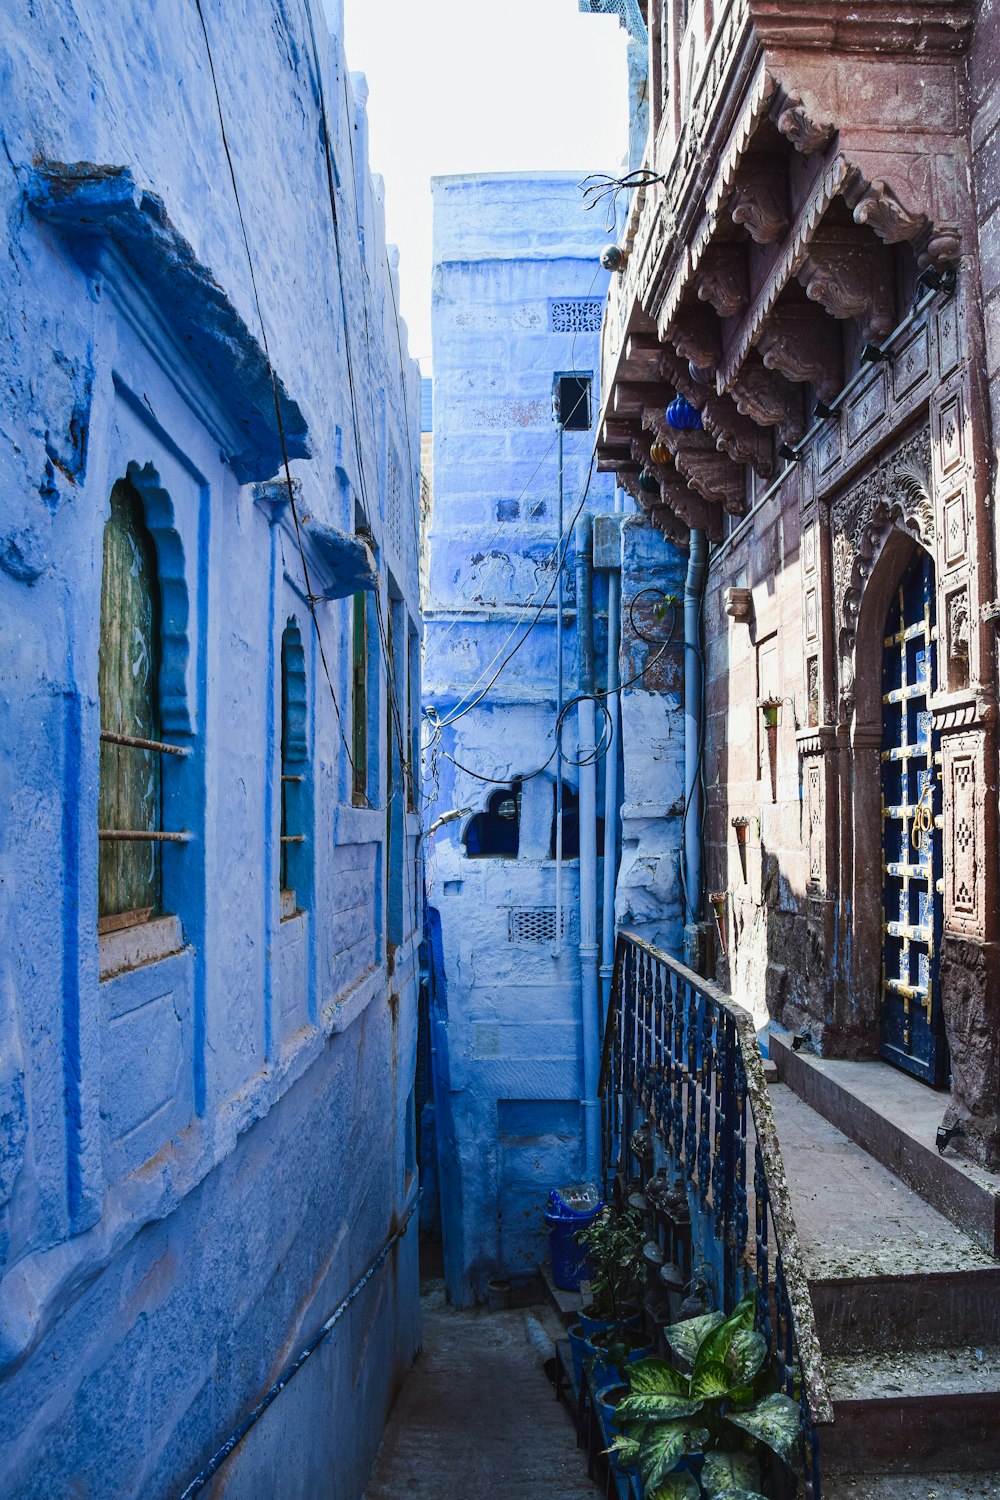 a narrow alleyway in a blue city